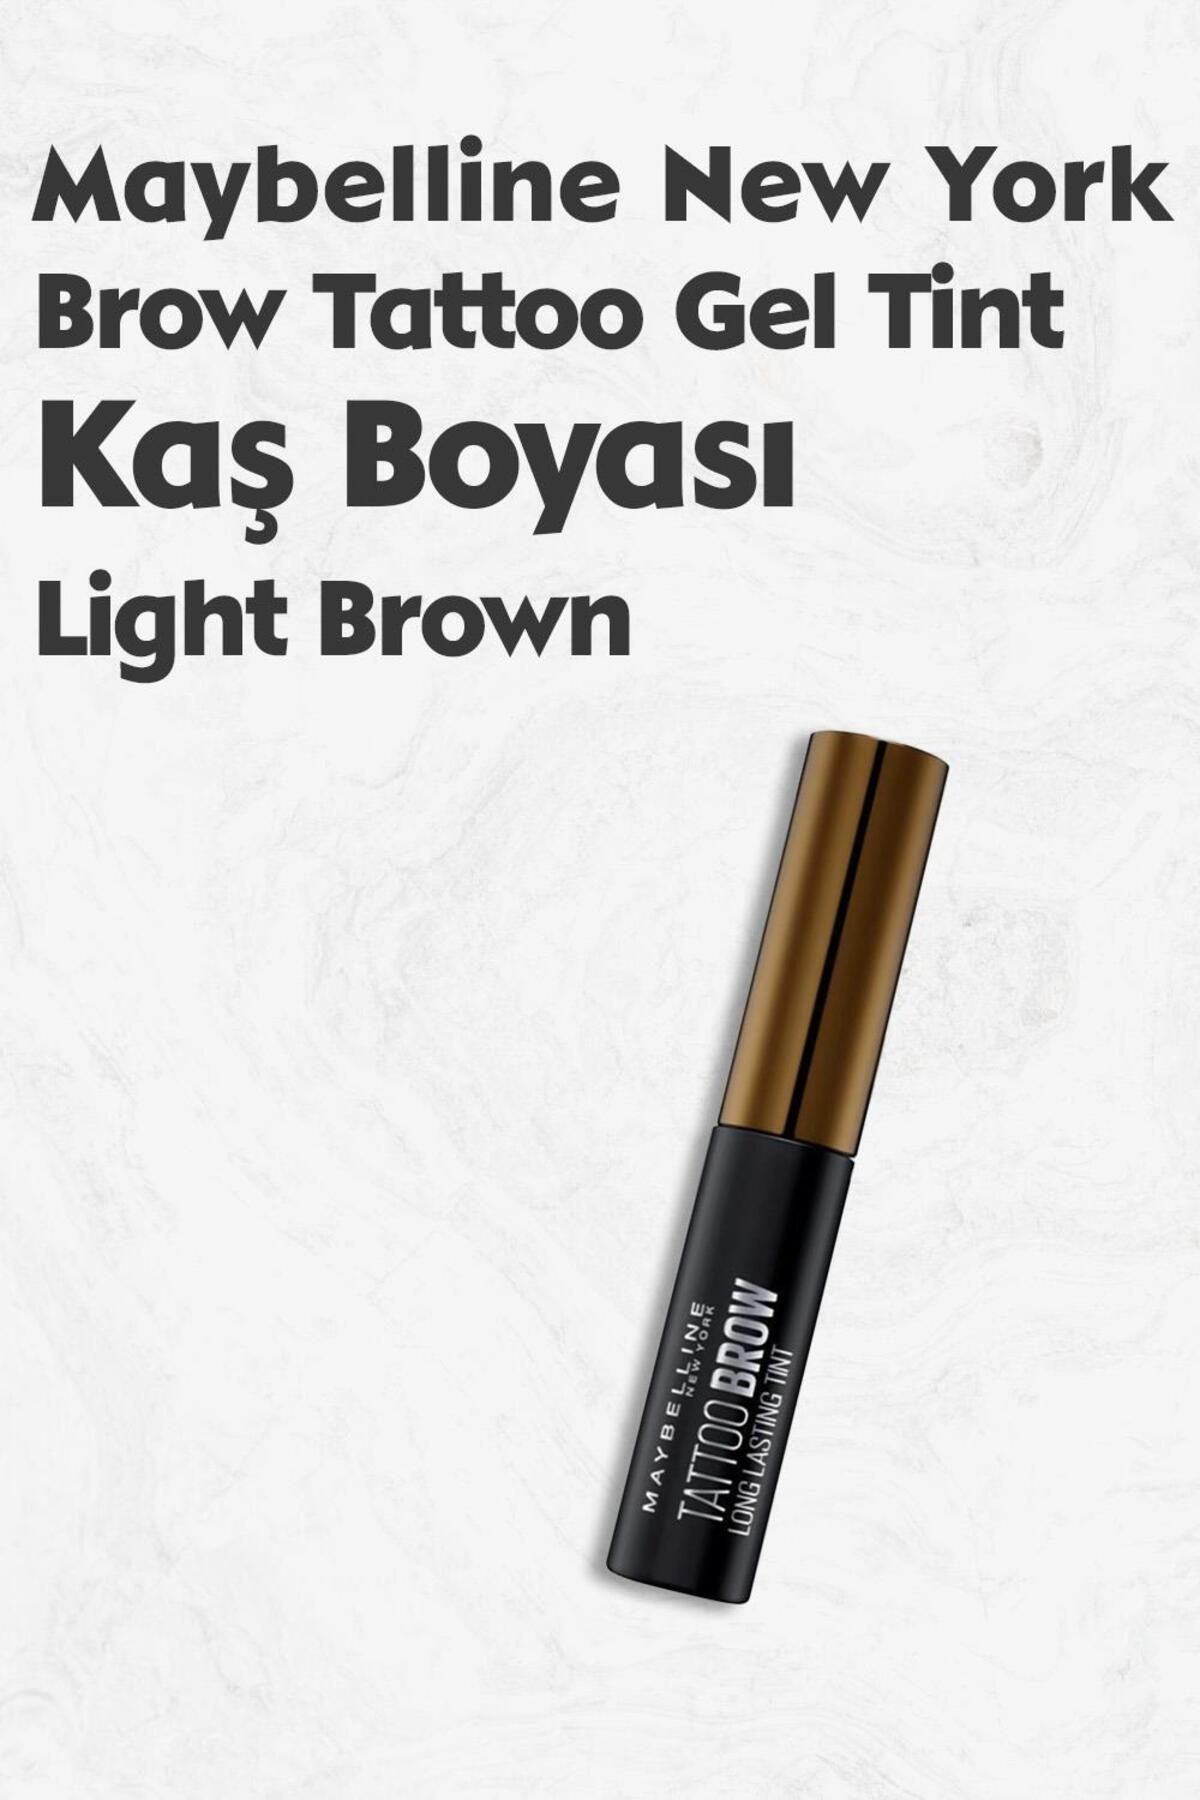 Maybelline New York Maybelline Brow Tattoo Gel Tint Light Brown - Açık Ton